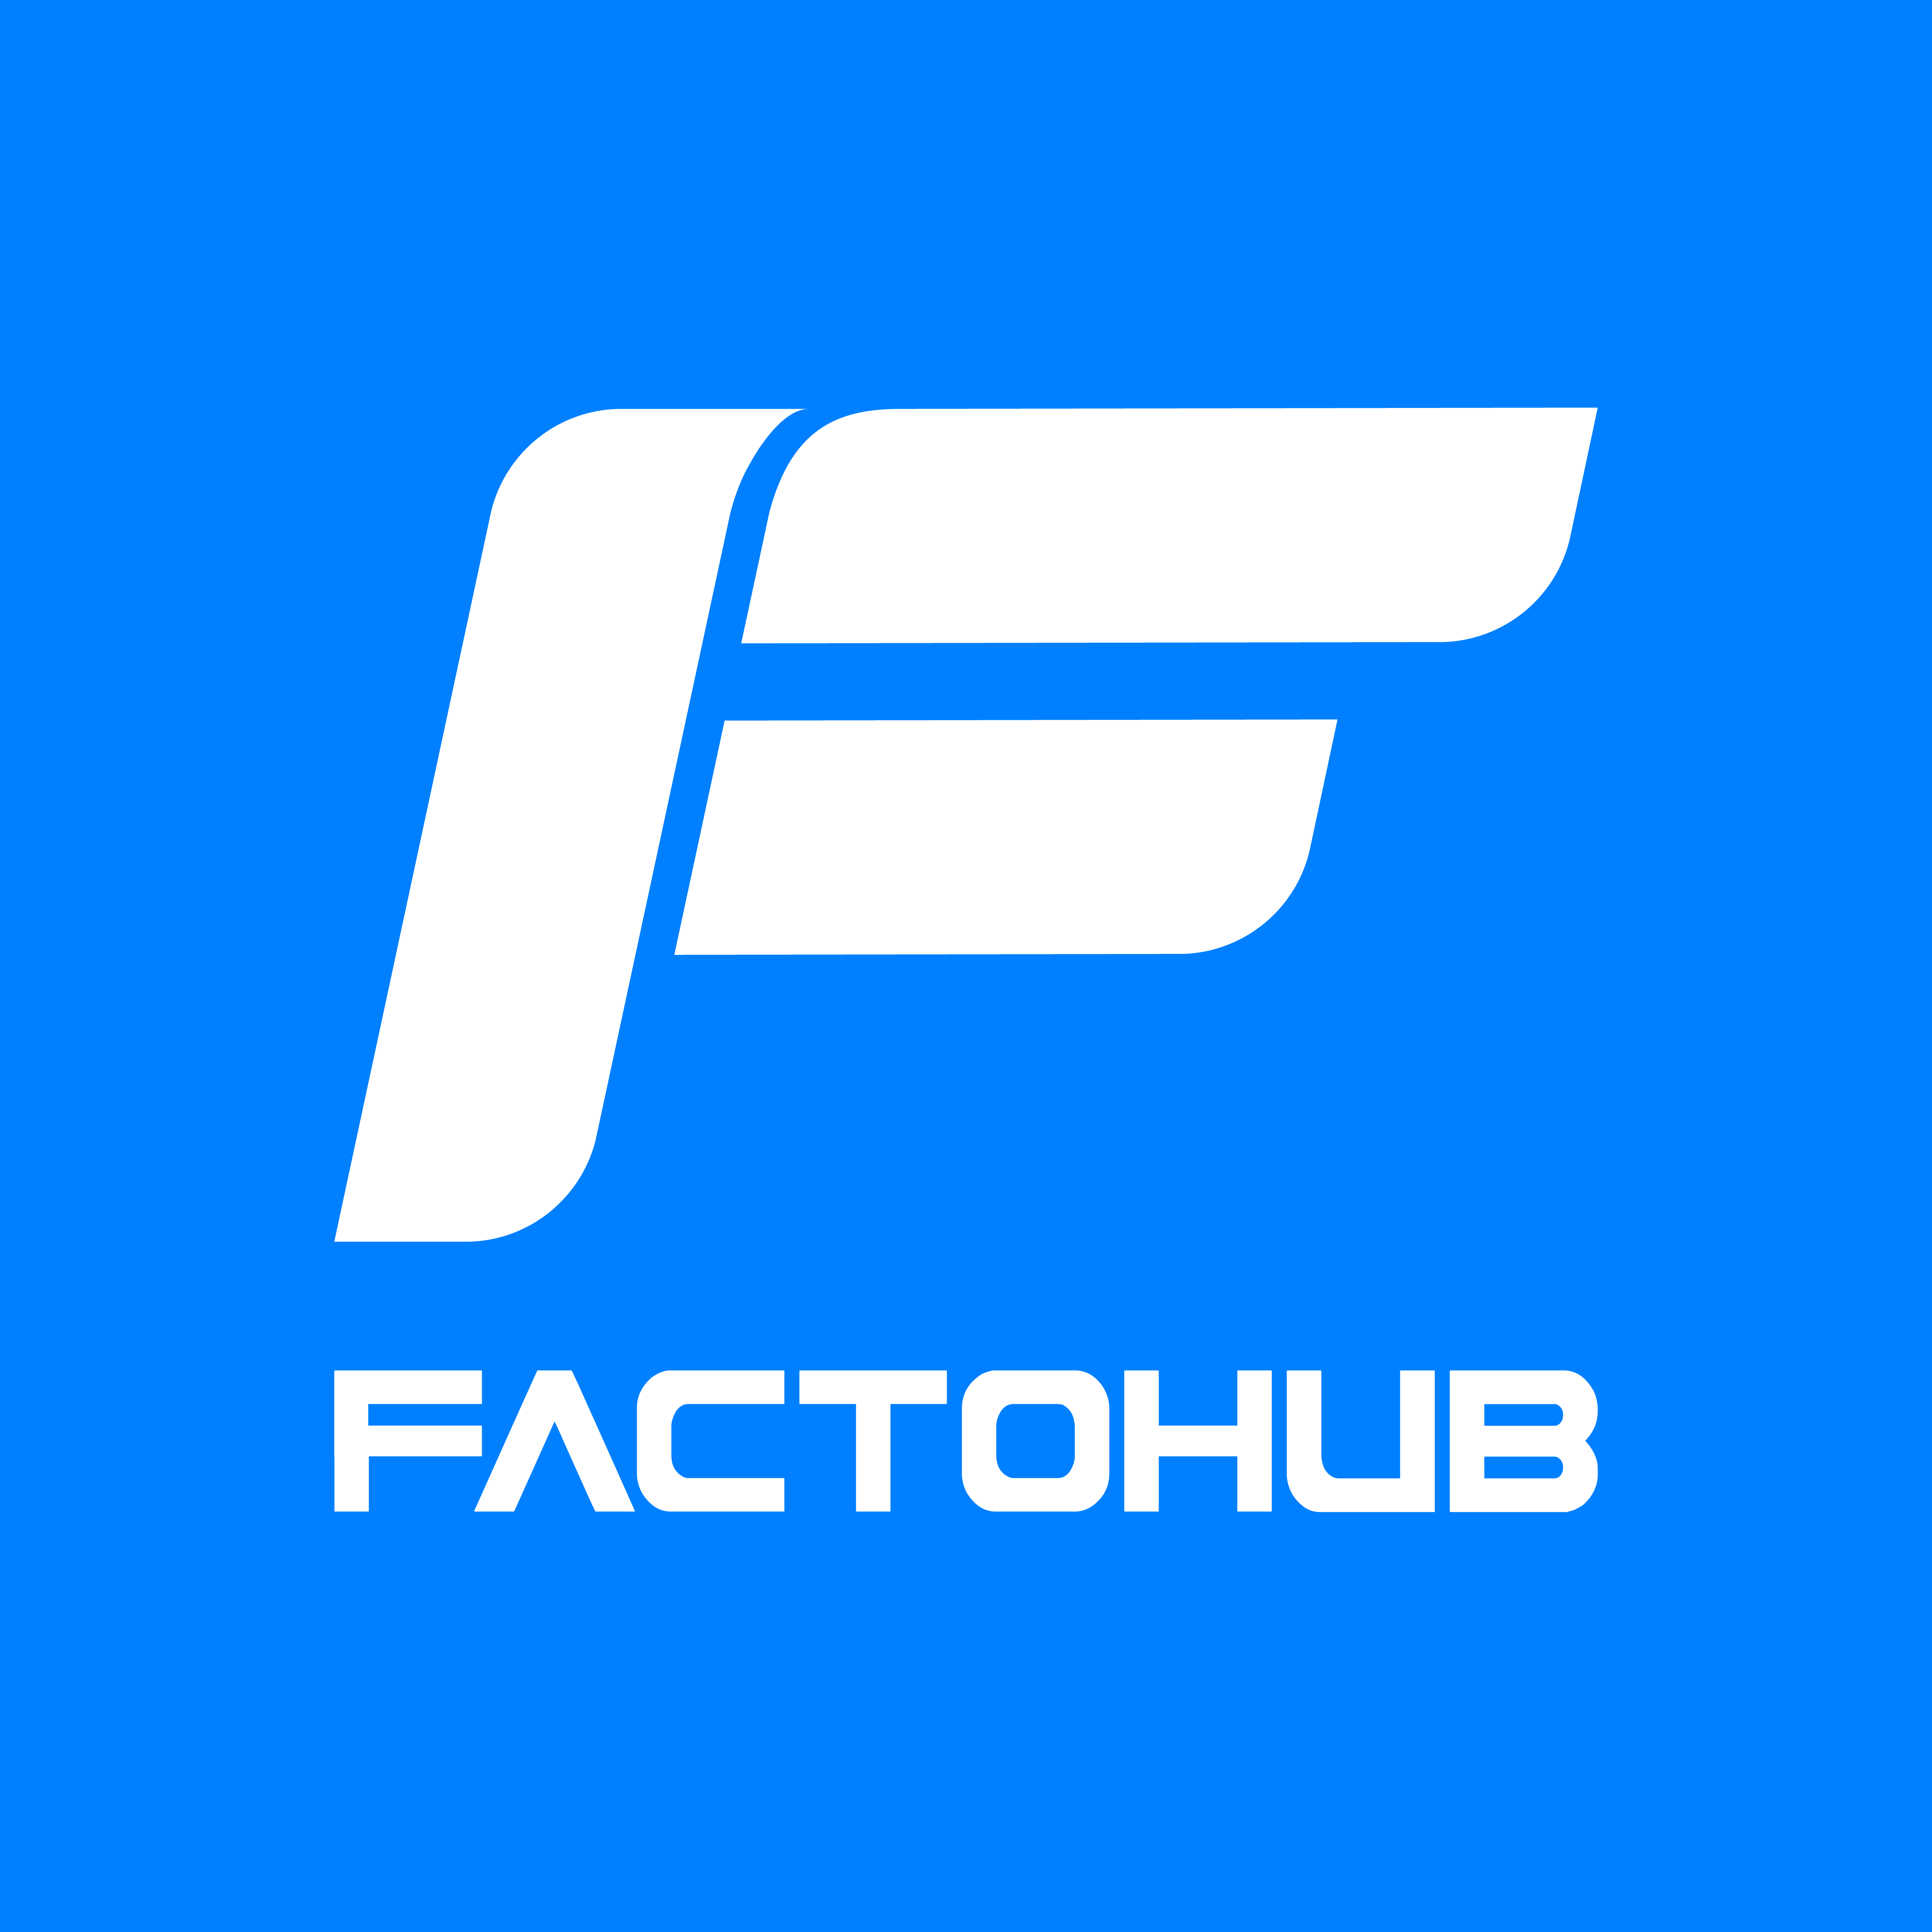 Factohub